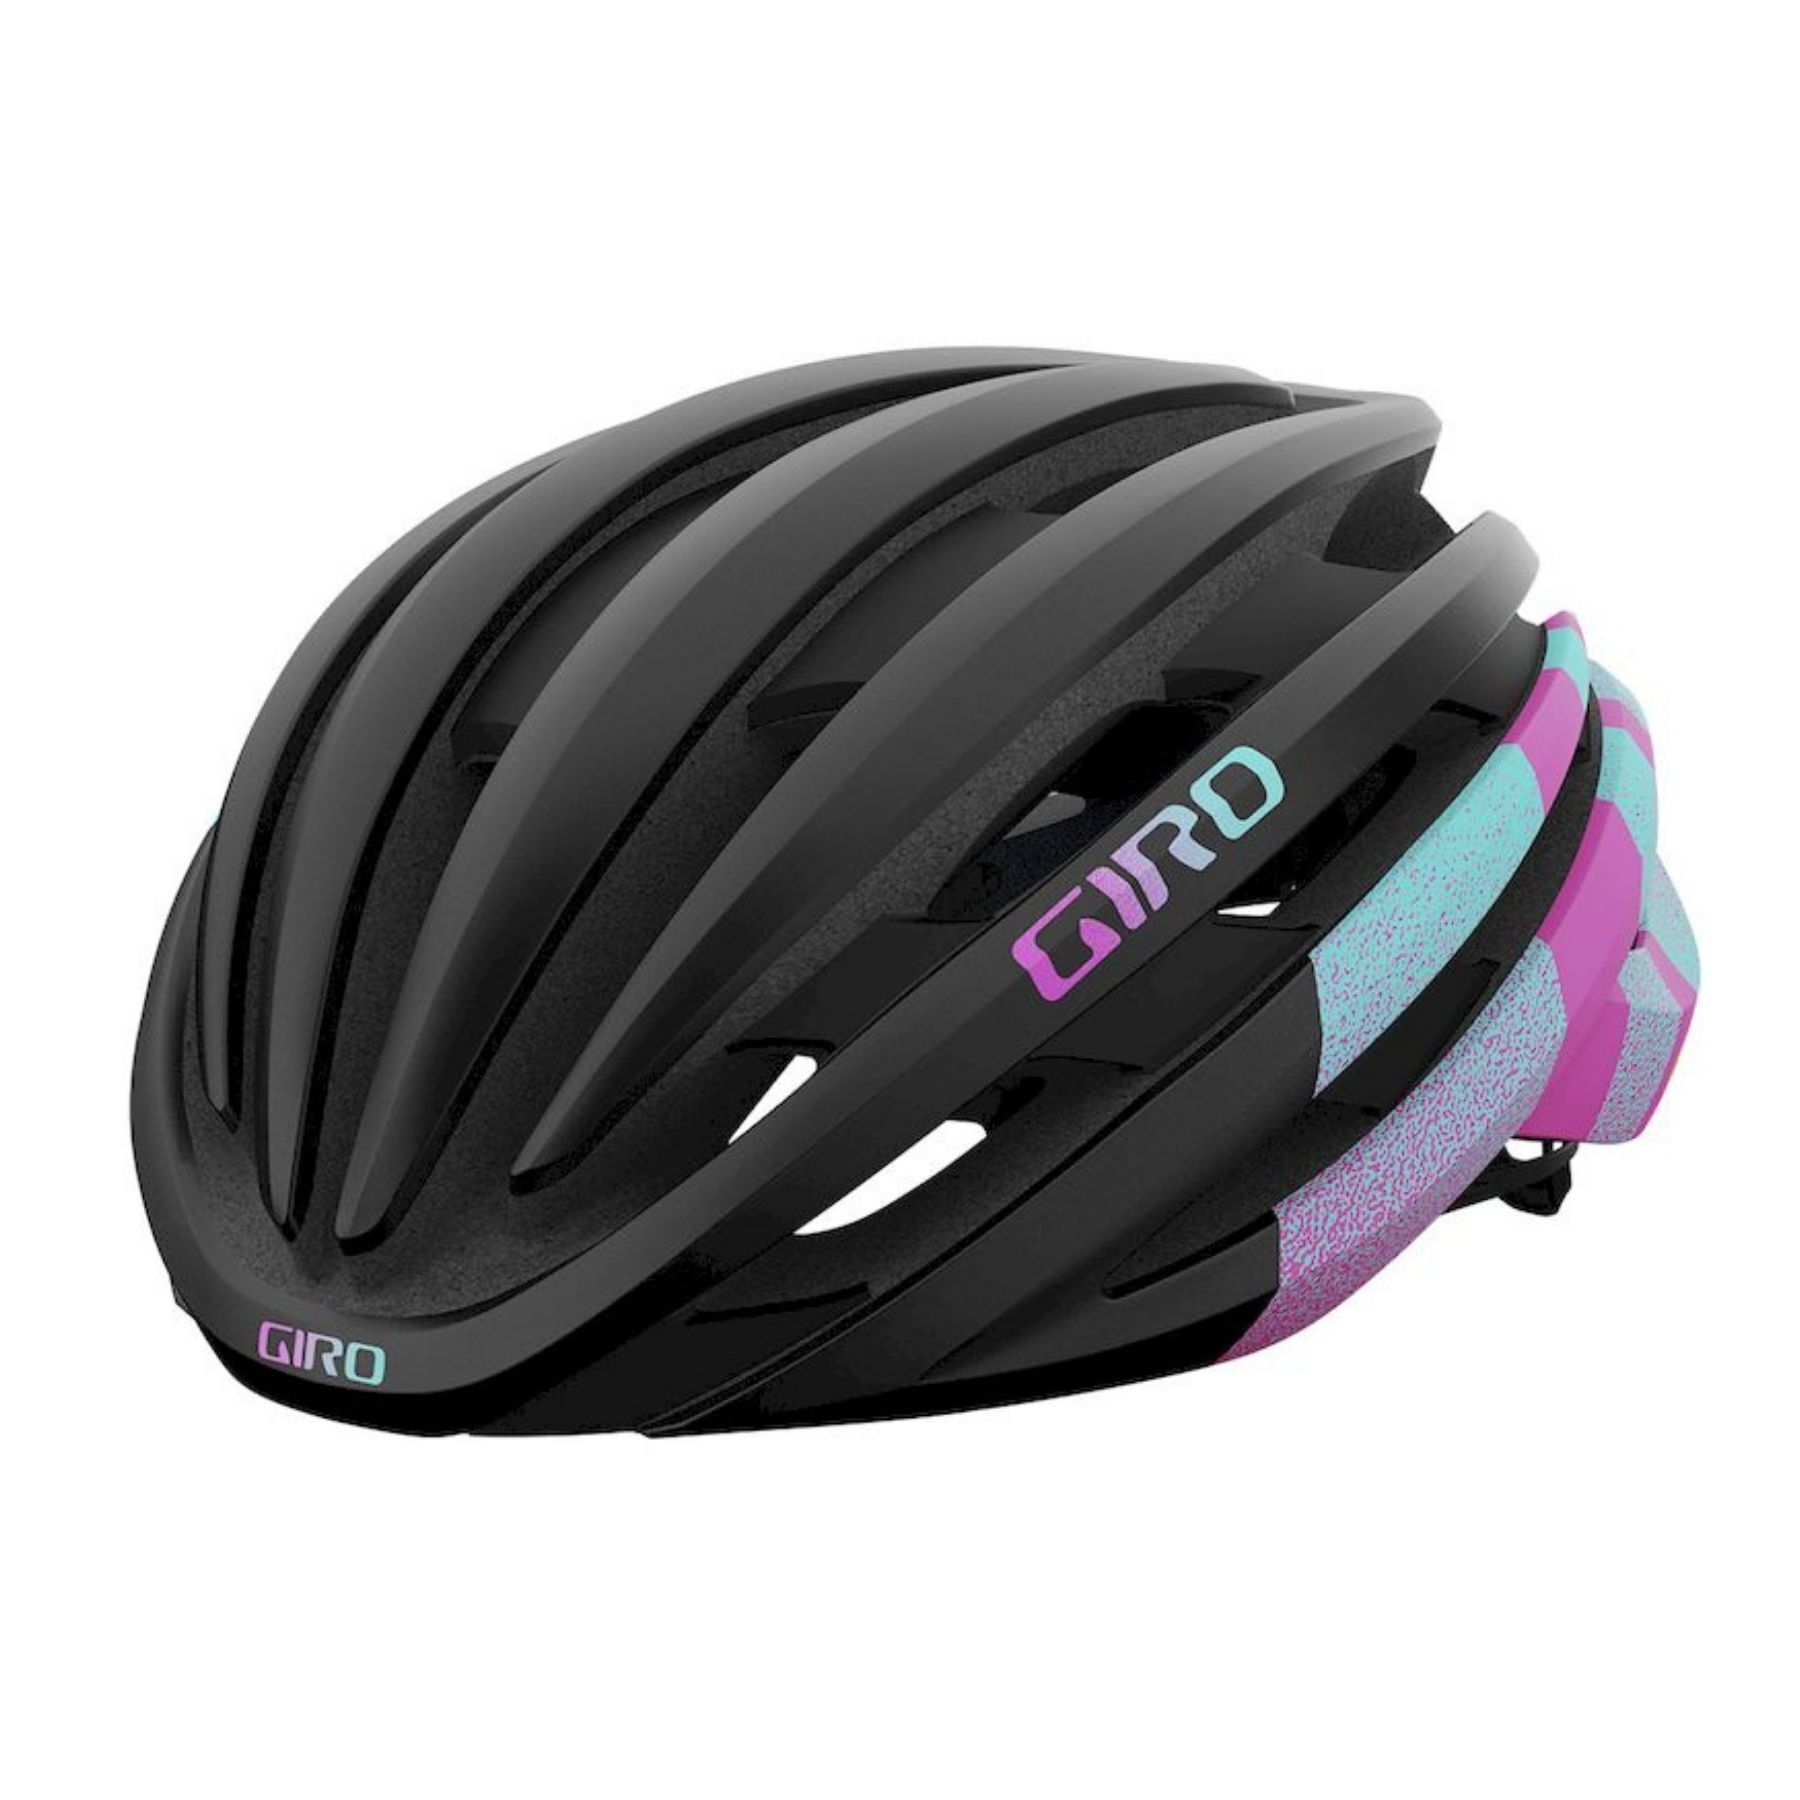 Giro Ember Mips - Road bike helmet - Women's